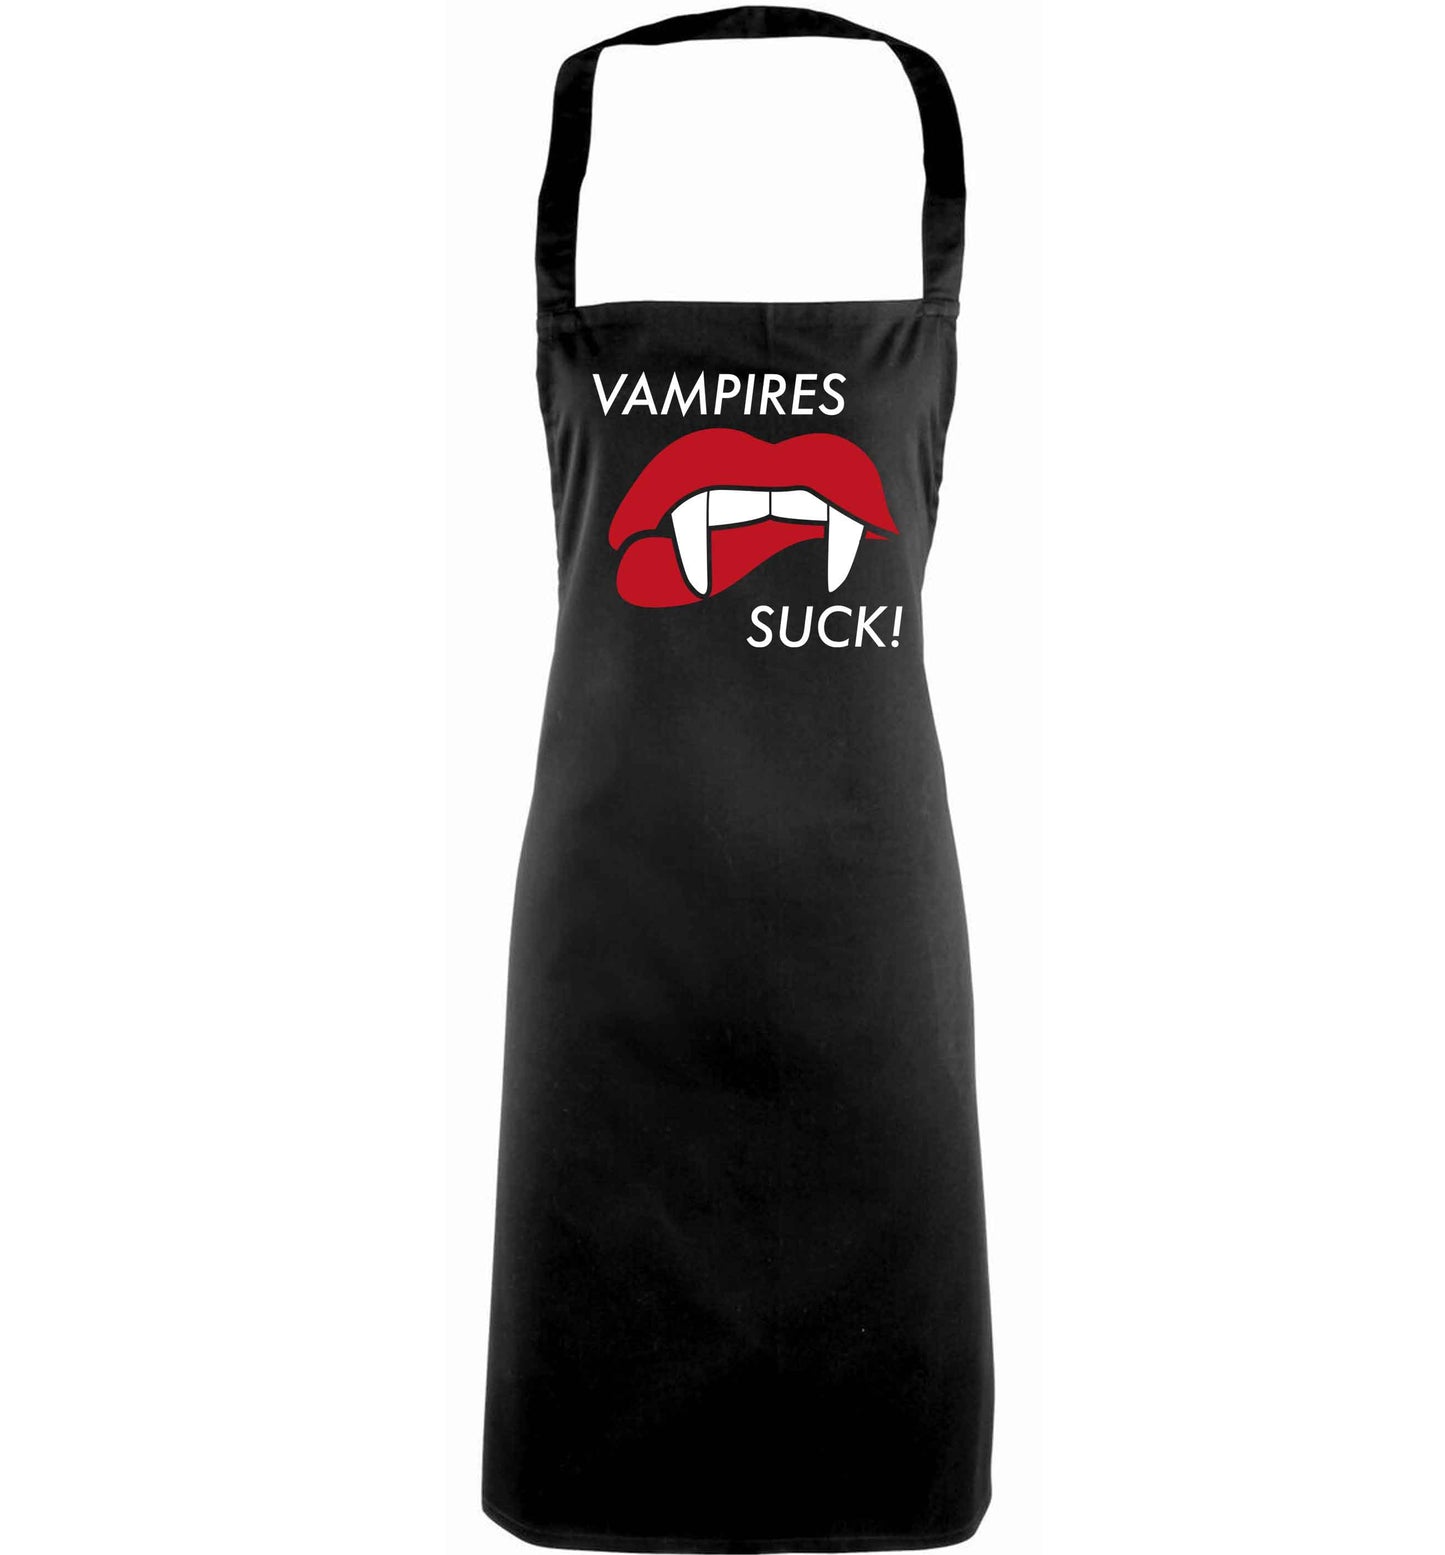 Vampires suck adults black apron